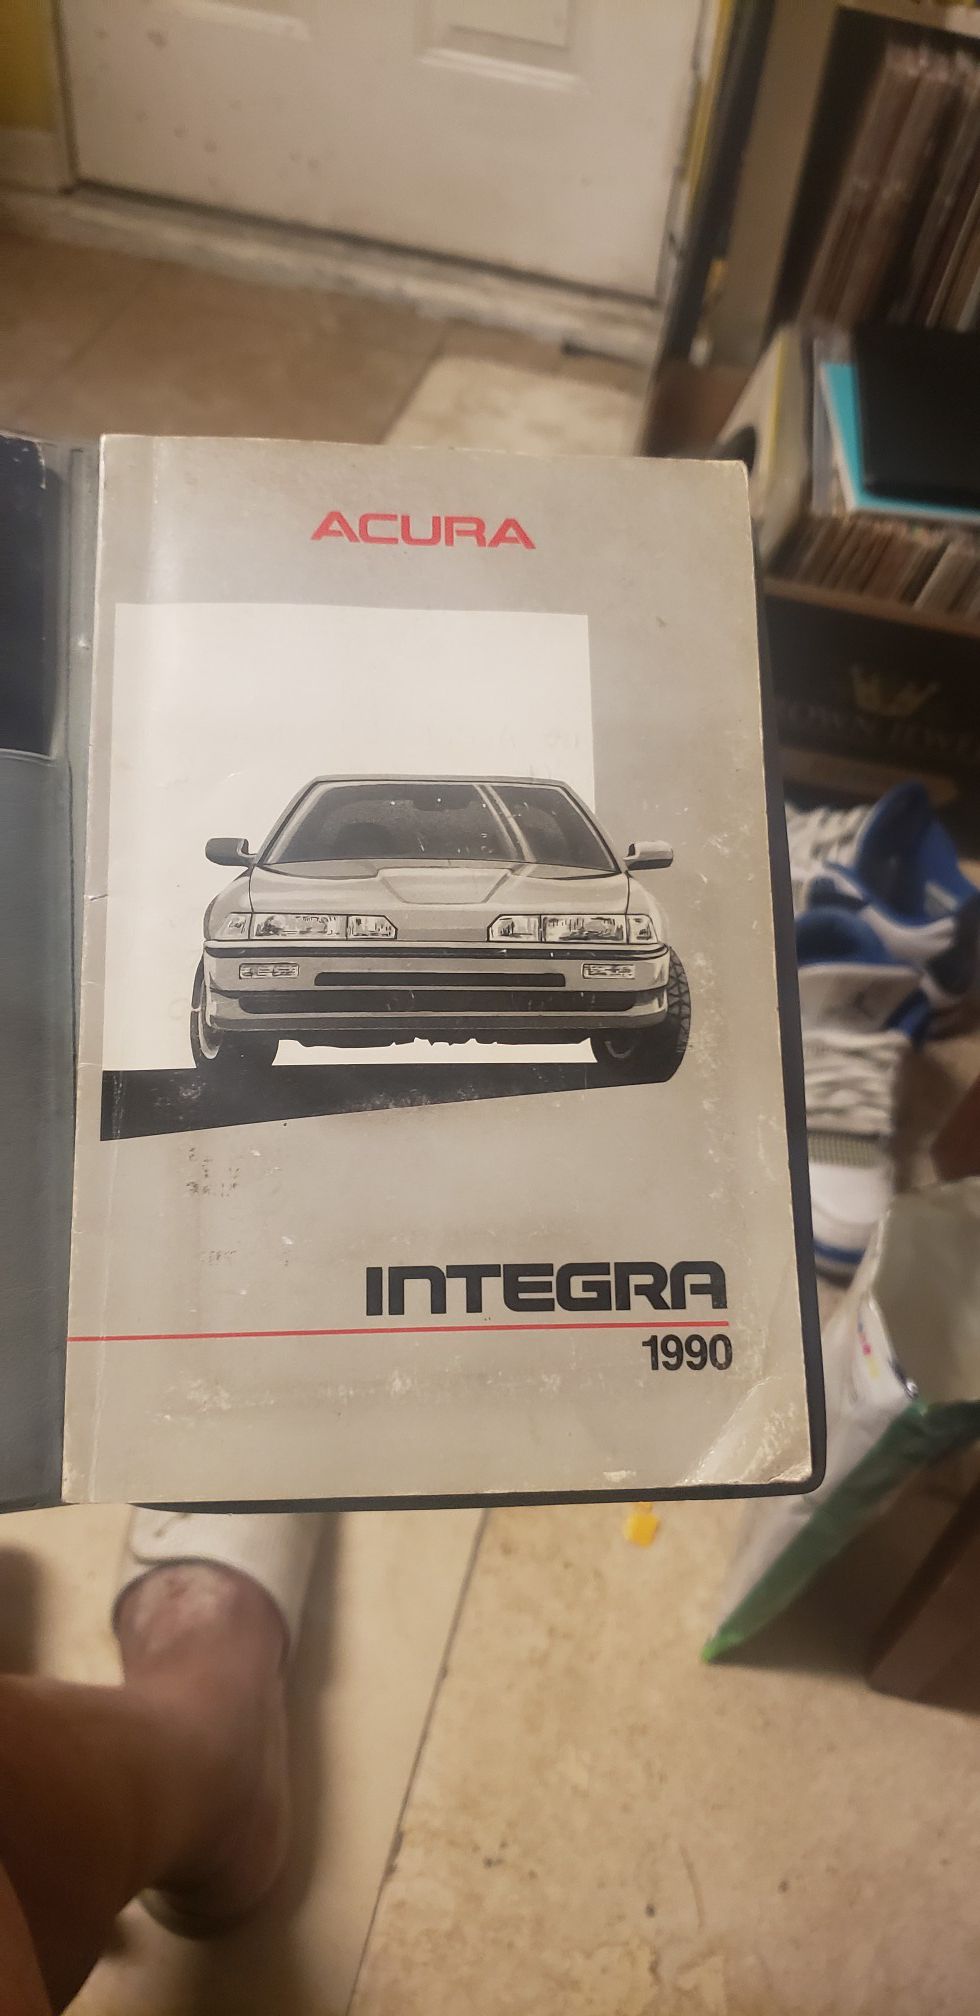 Acura manual book